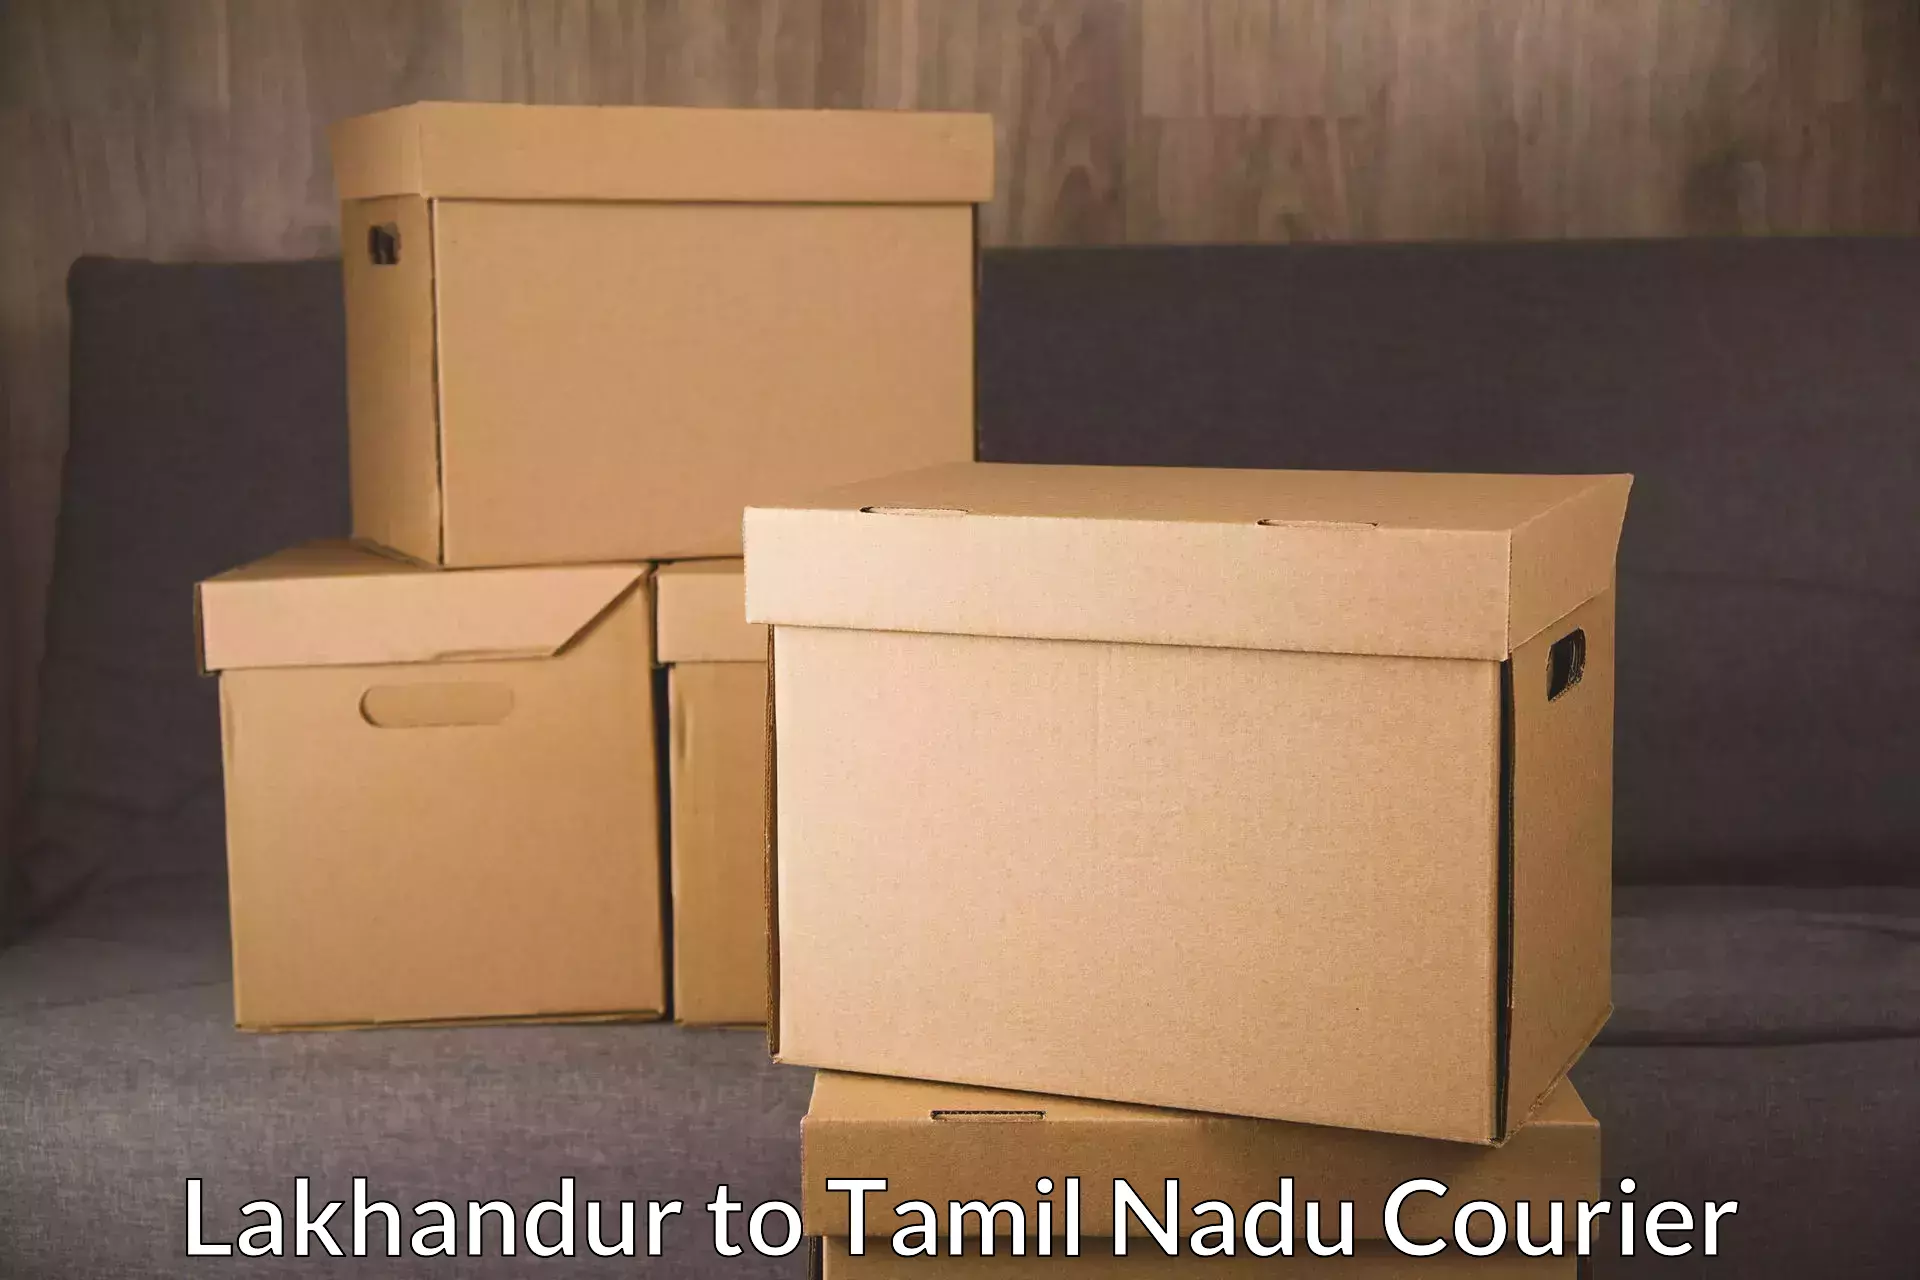 Flexible delivery schedules Lakhandur to Thirukkattupalli